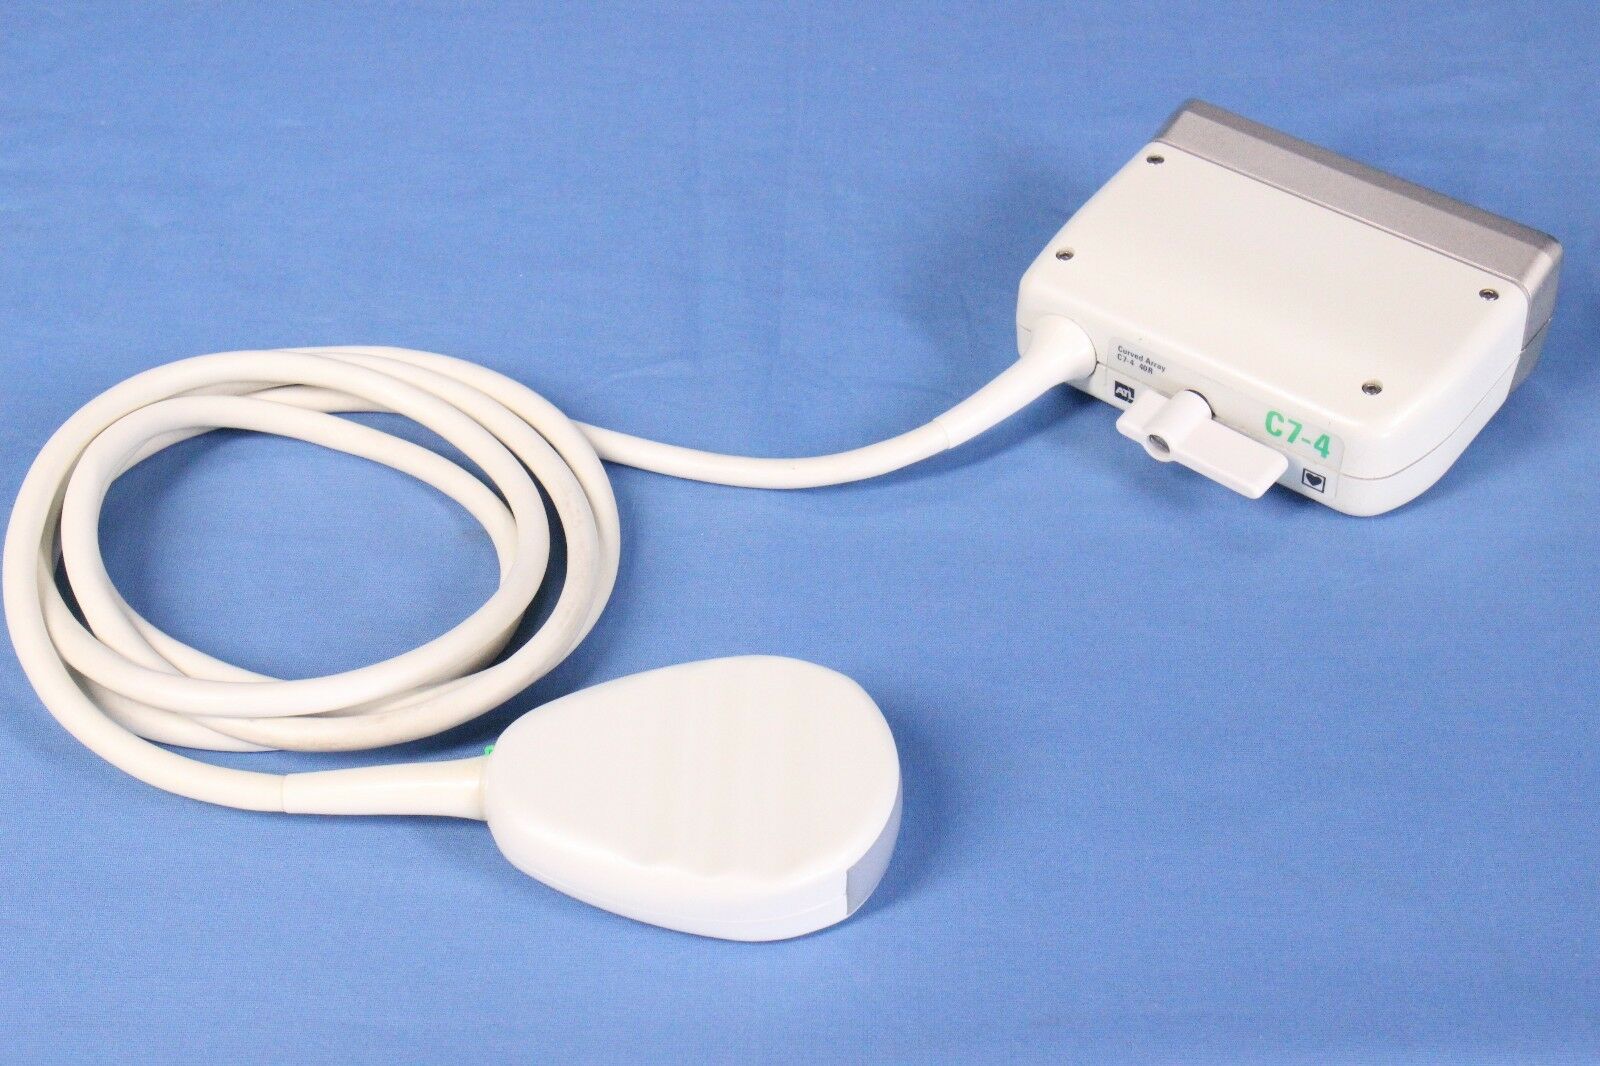 ATL C7-4 Curved Array Ultrasound Probe Philips Ultrasound Transducer w/ Warranty DIAGNOSTIC ULTRASOUND MACHINES FOR SALE